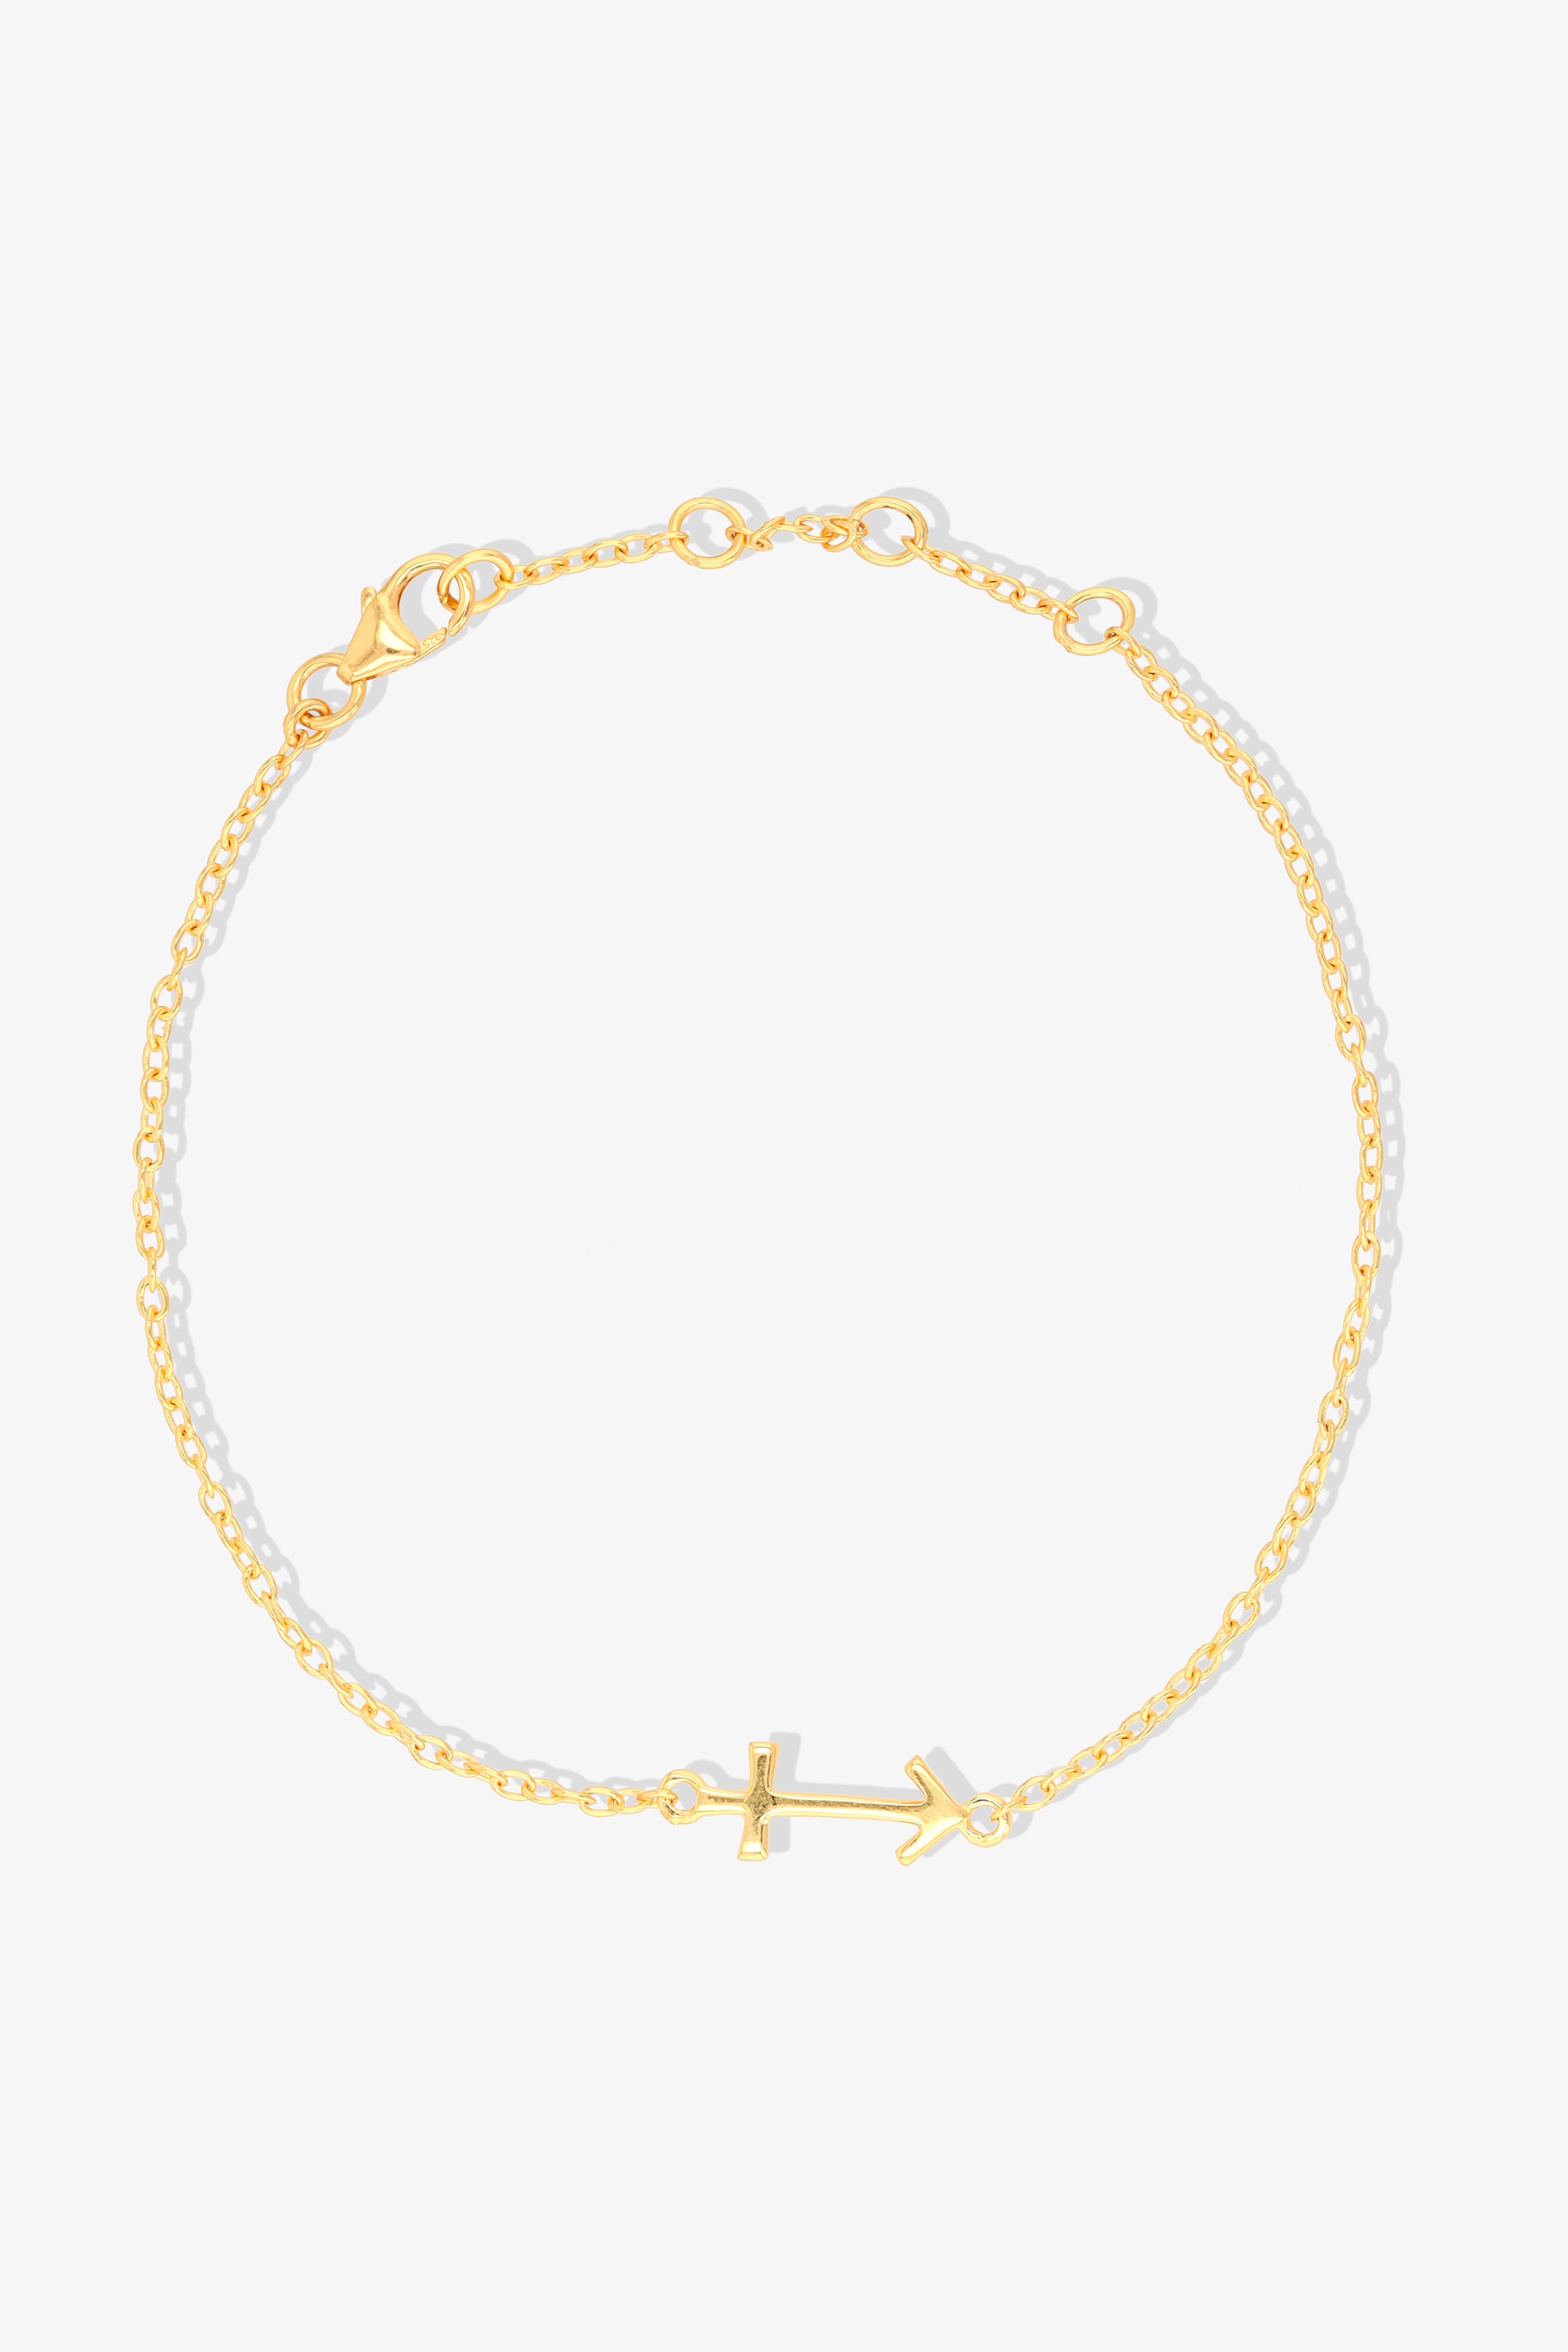 Sagittarius Zodiac 18k Gold Vermeil Bracelet